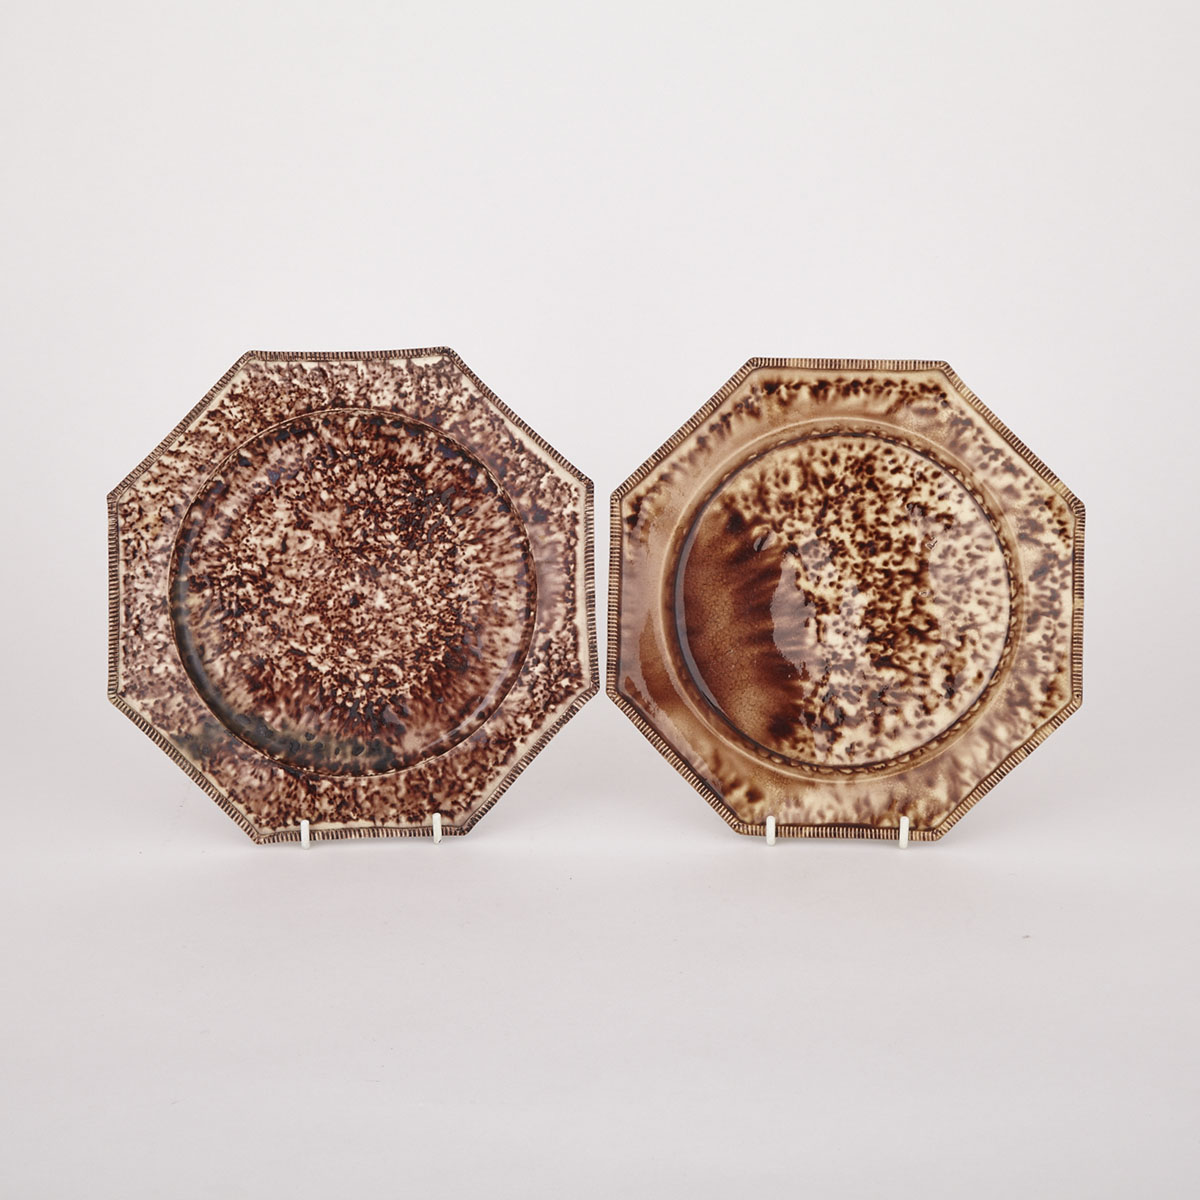 Two Staffordshire Octagonal Tortoiseshell-Glazed Creamware Plates, c.1750-60